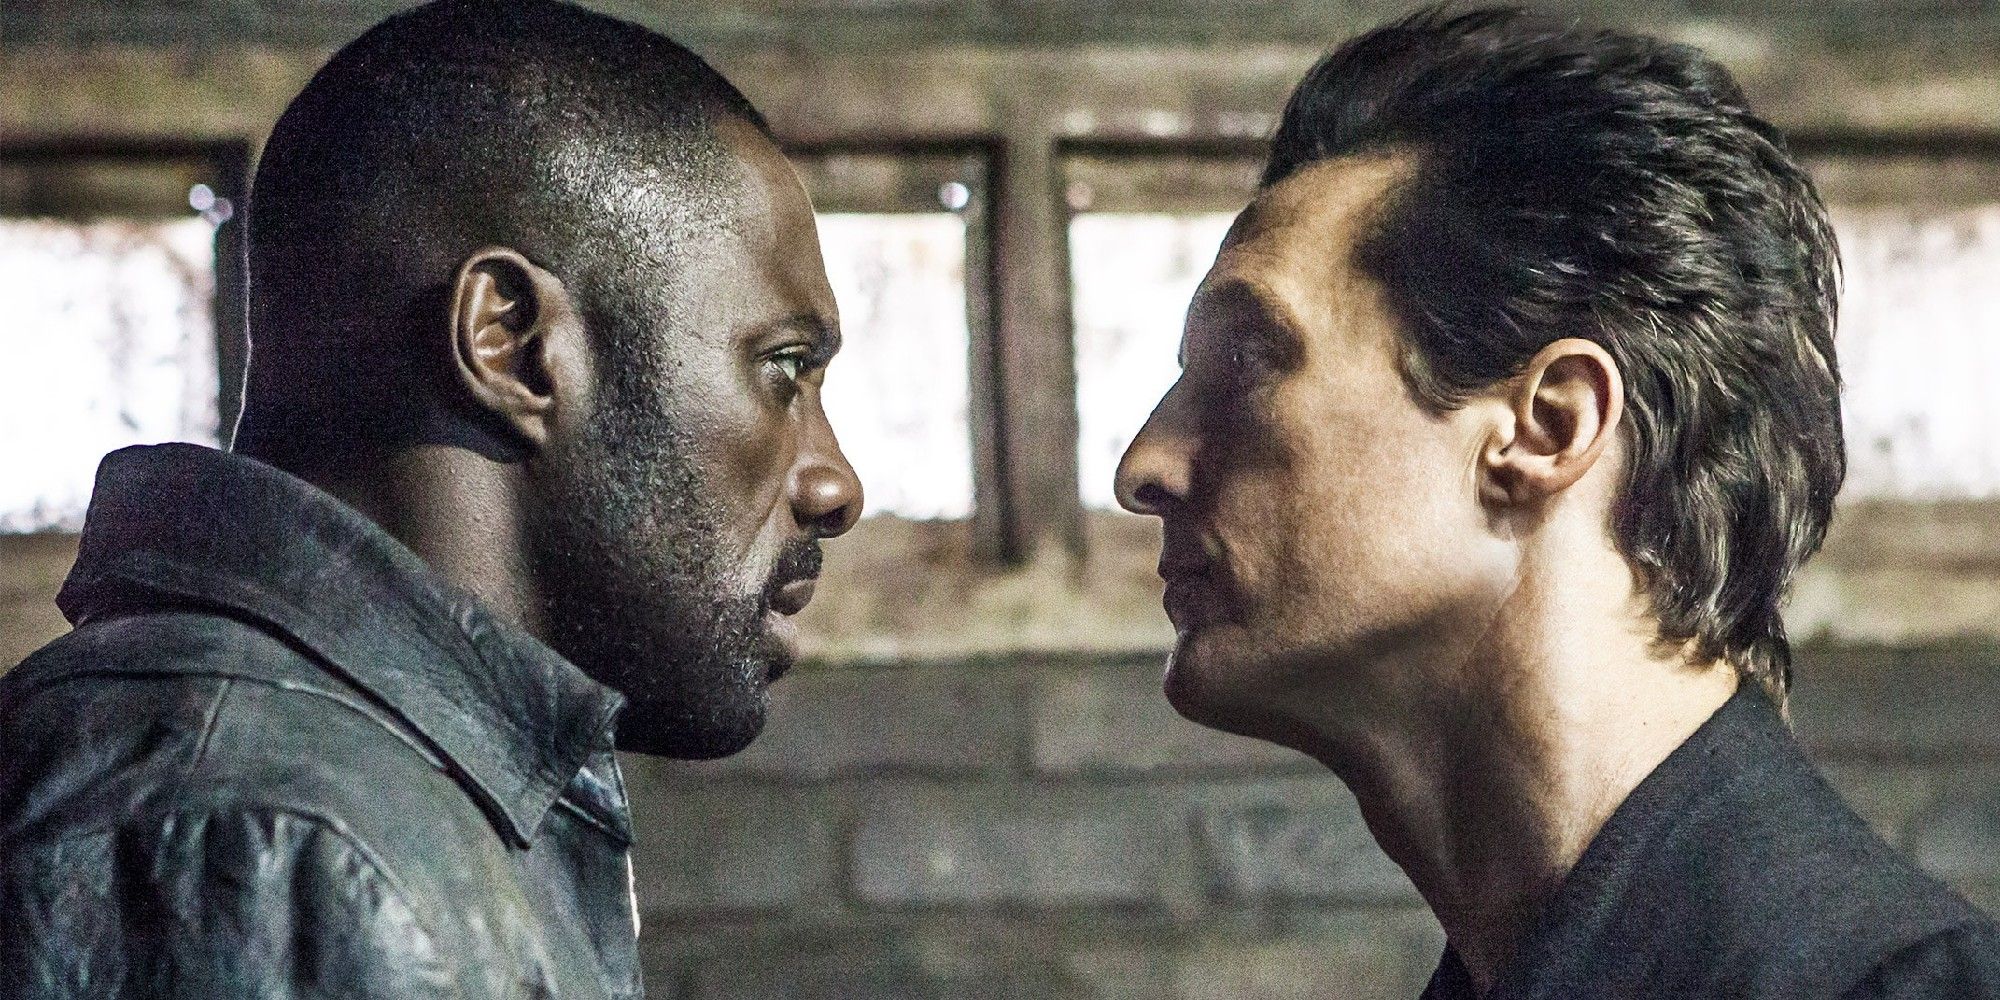 Idris Elba and Matthew McConaughey facing off in The Dark Tower Movie